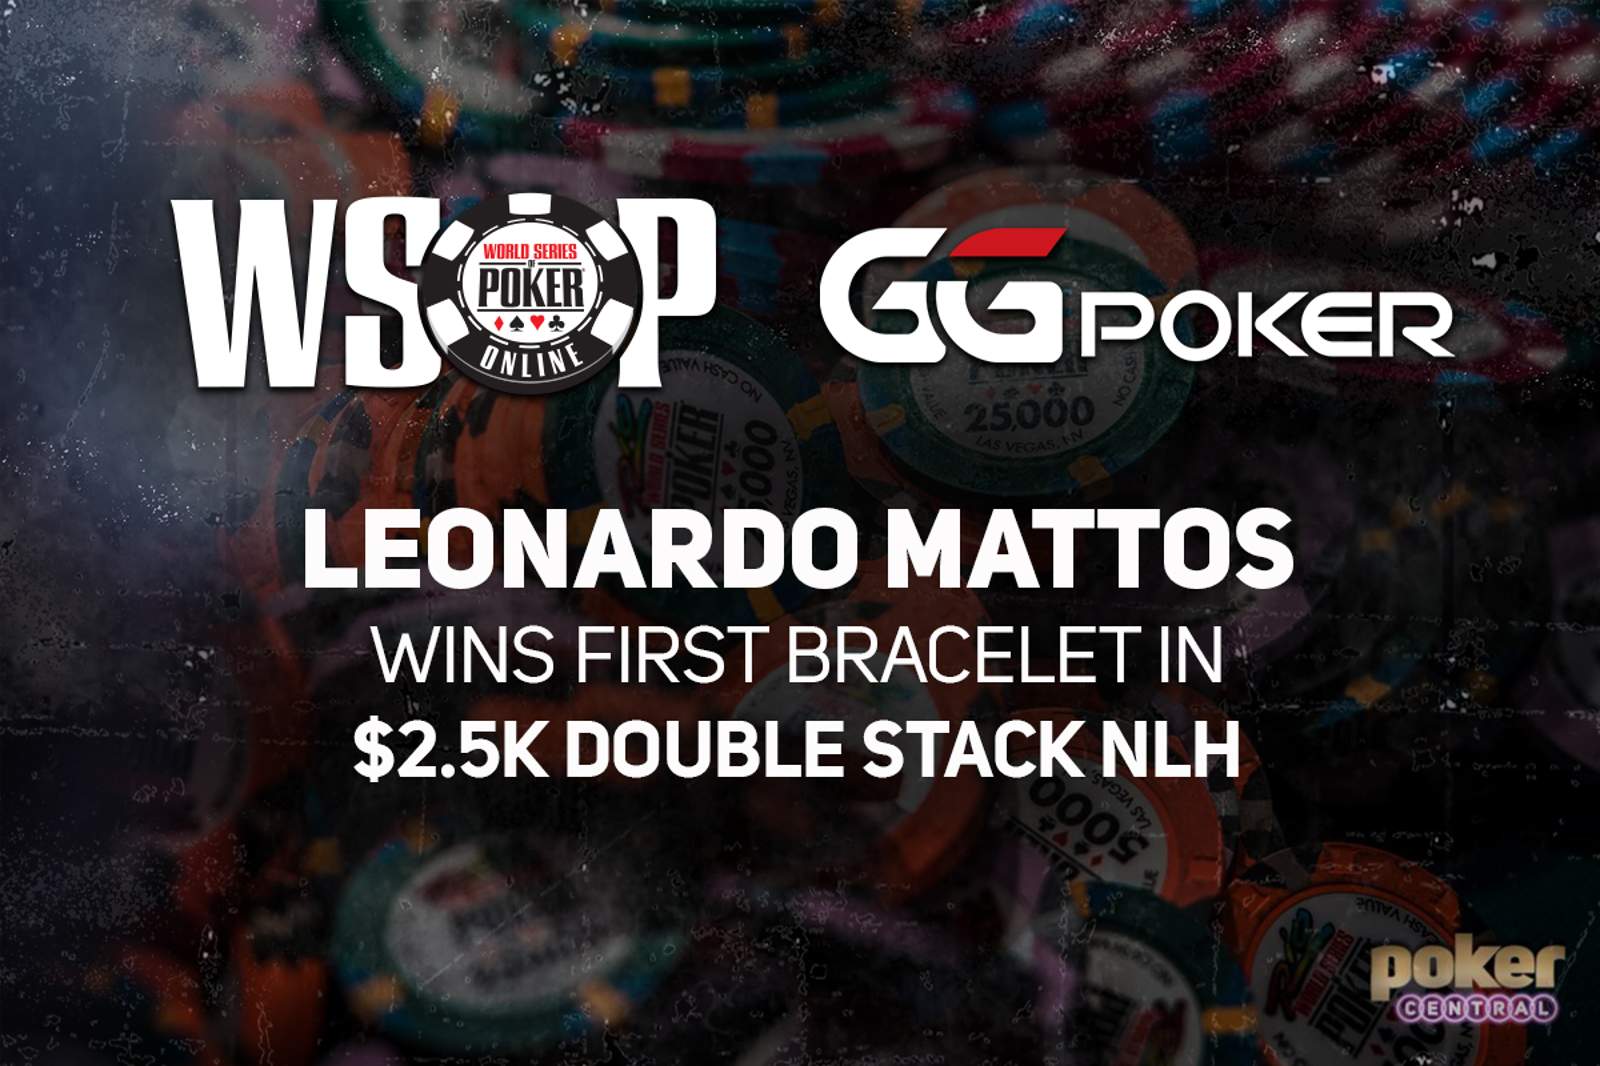 Leonardo Mattos Wins First Bracelet in GGPoker WSOP Online $2,500 Double Stack No-Limit Hold'em for $399,047